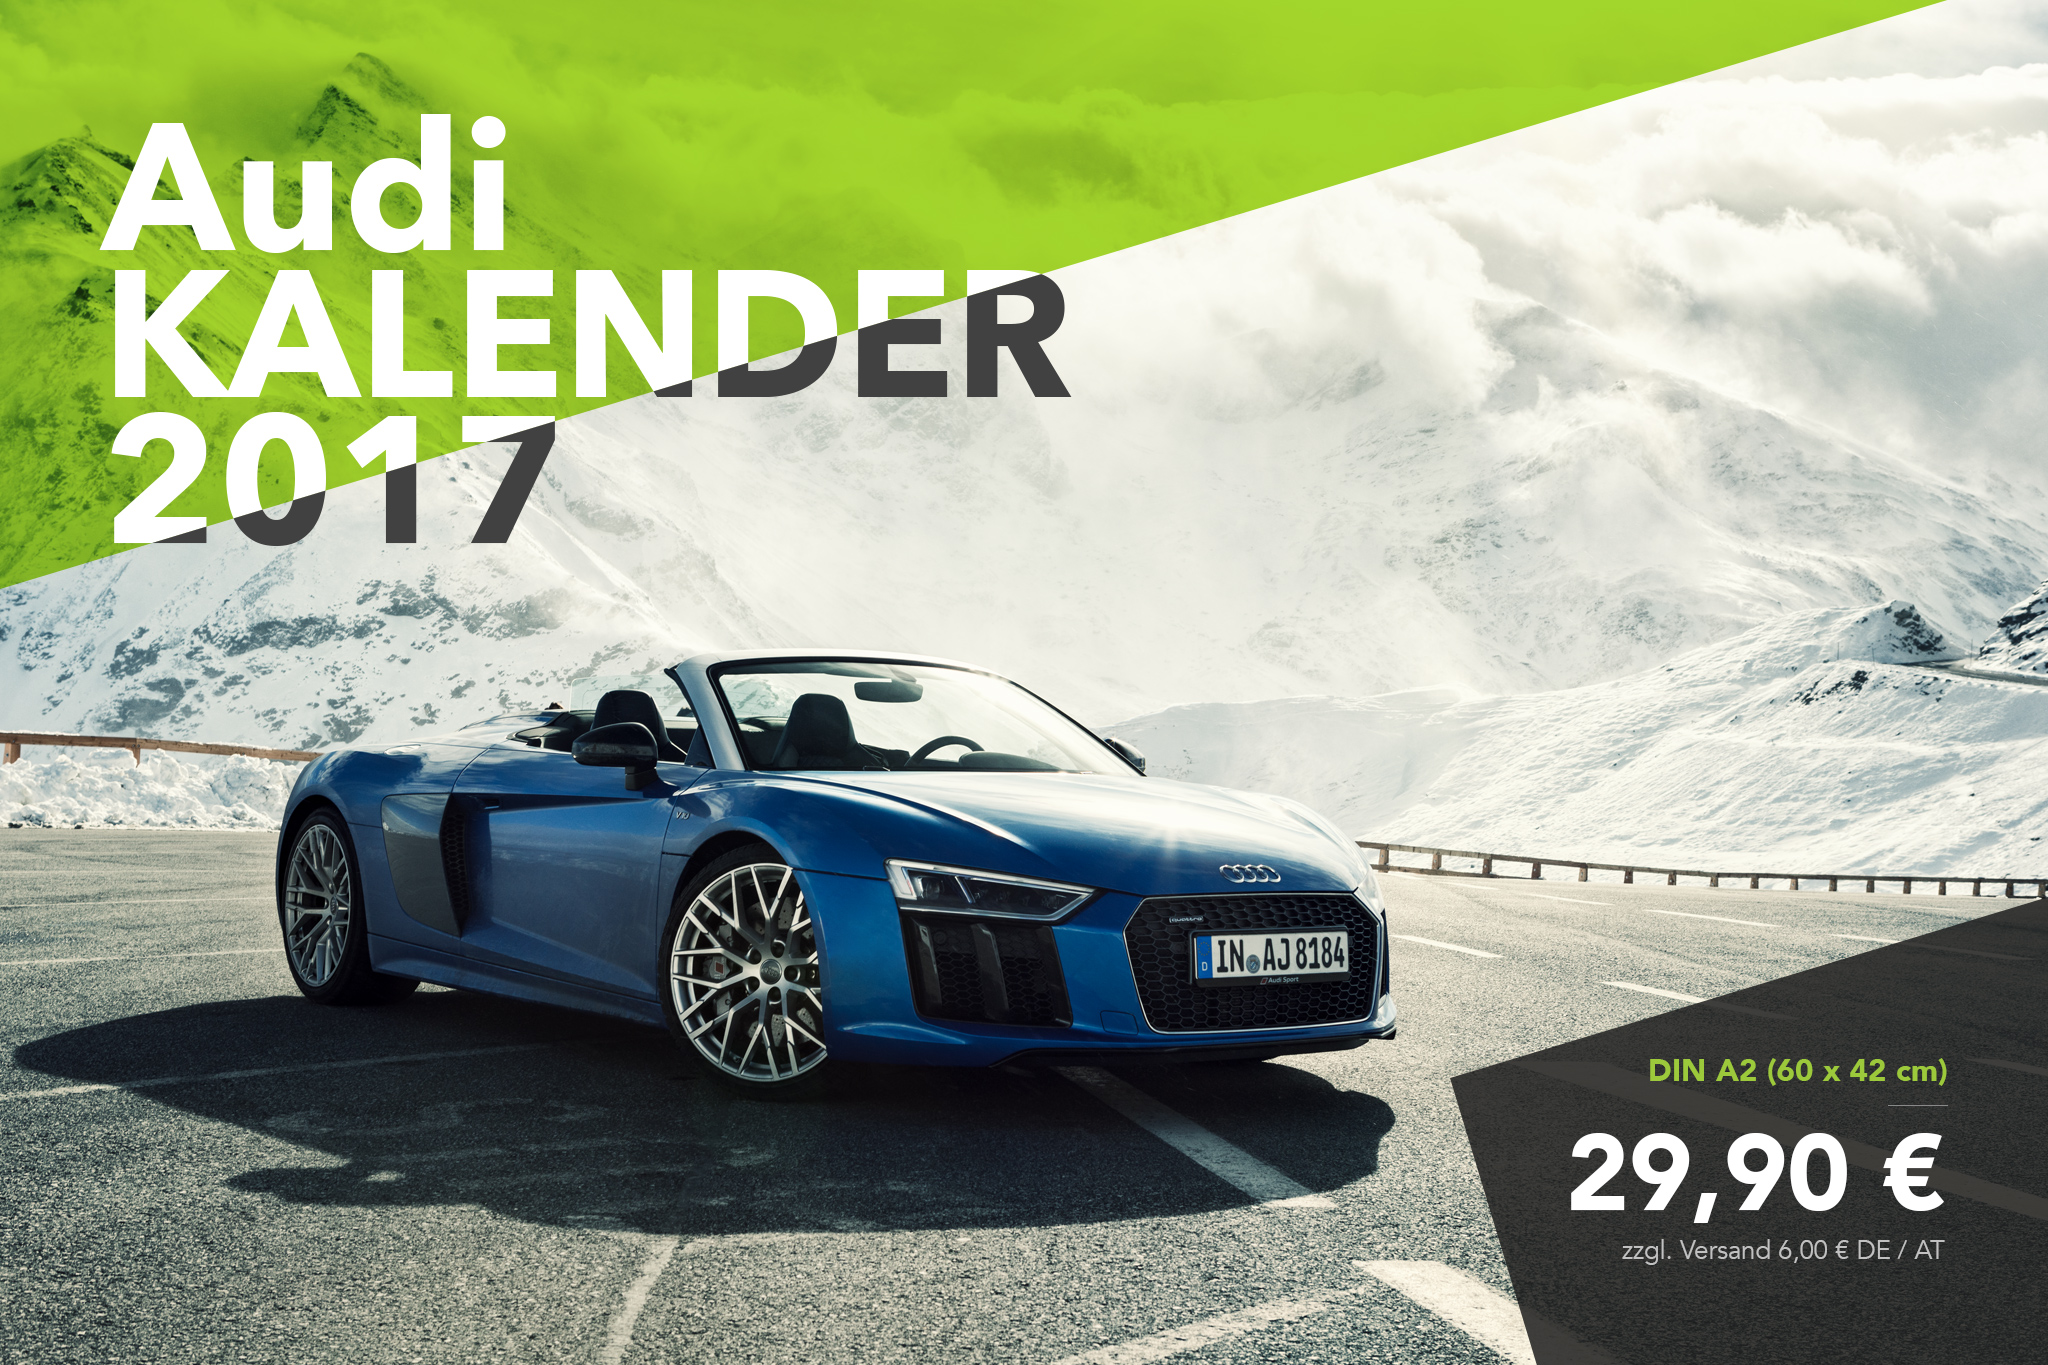 Audi Kalender 2017 - Simninja Special